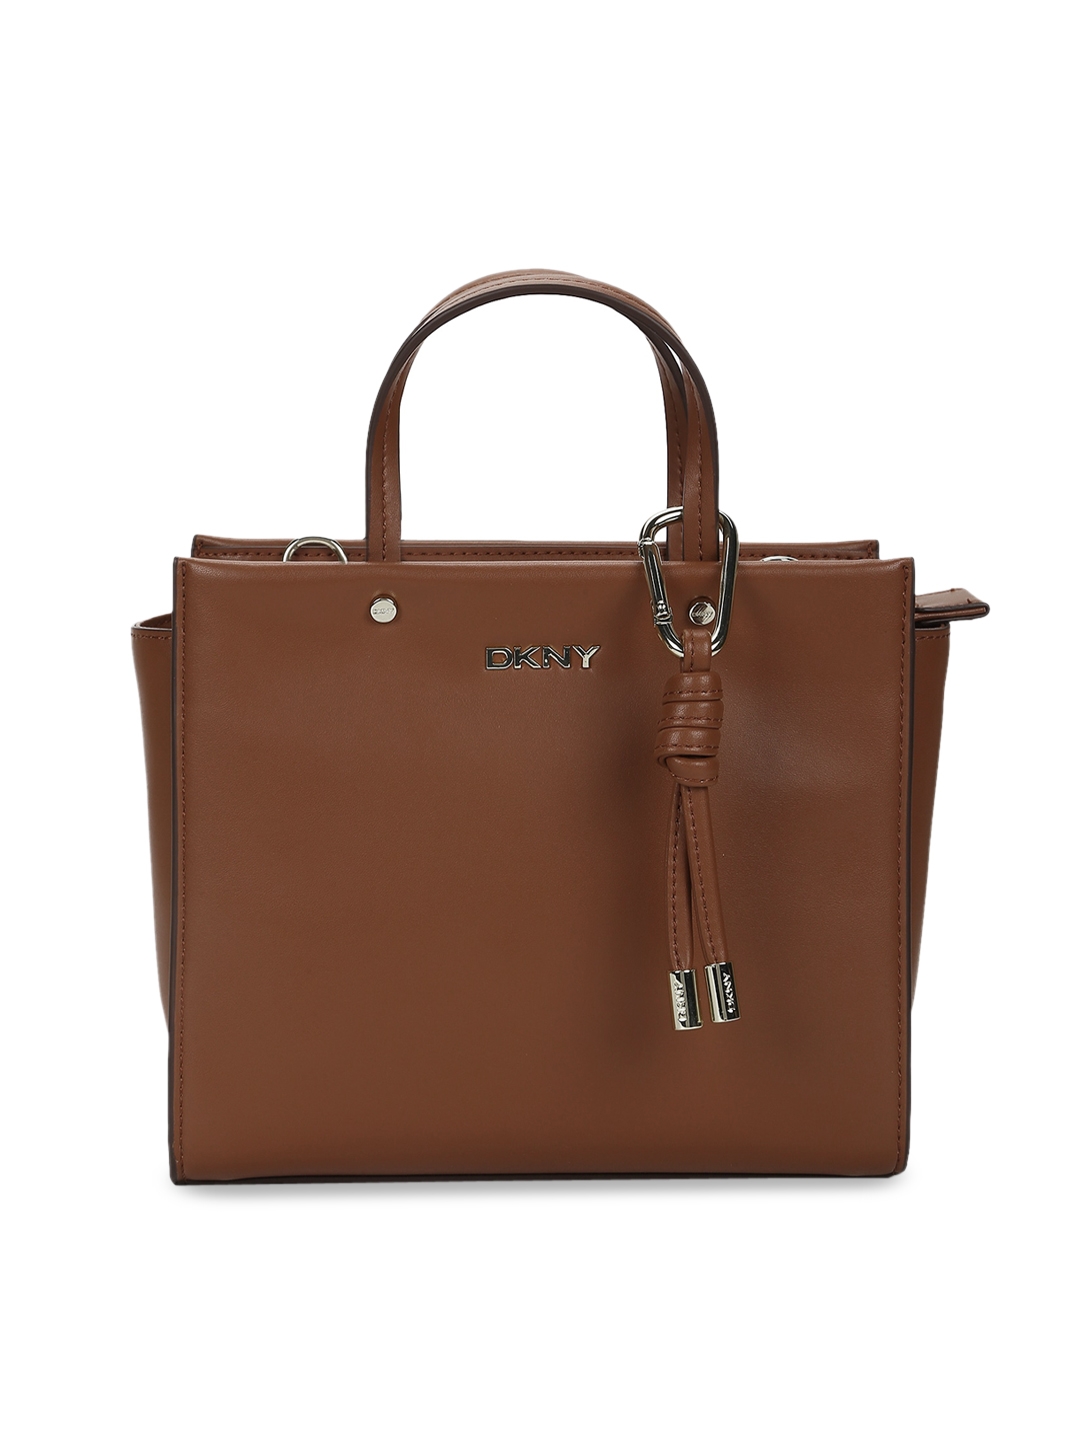 DKNY Women Brown Leather Structured Tasseled Satchel Bag